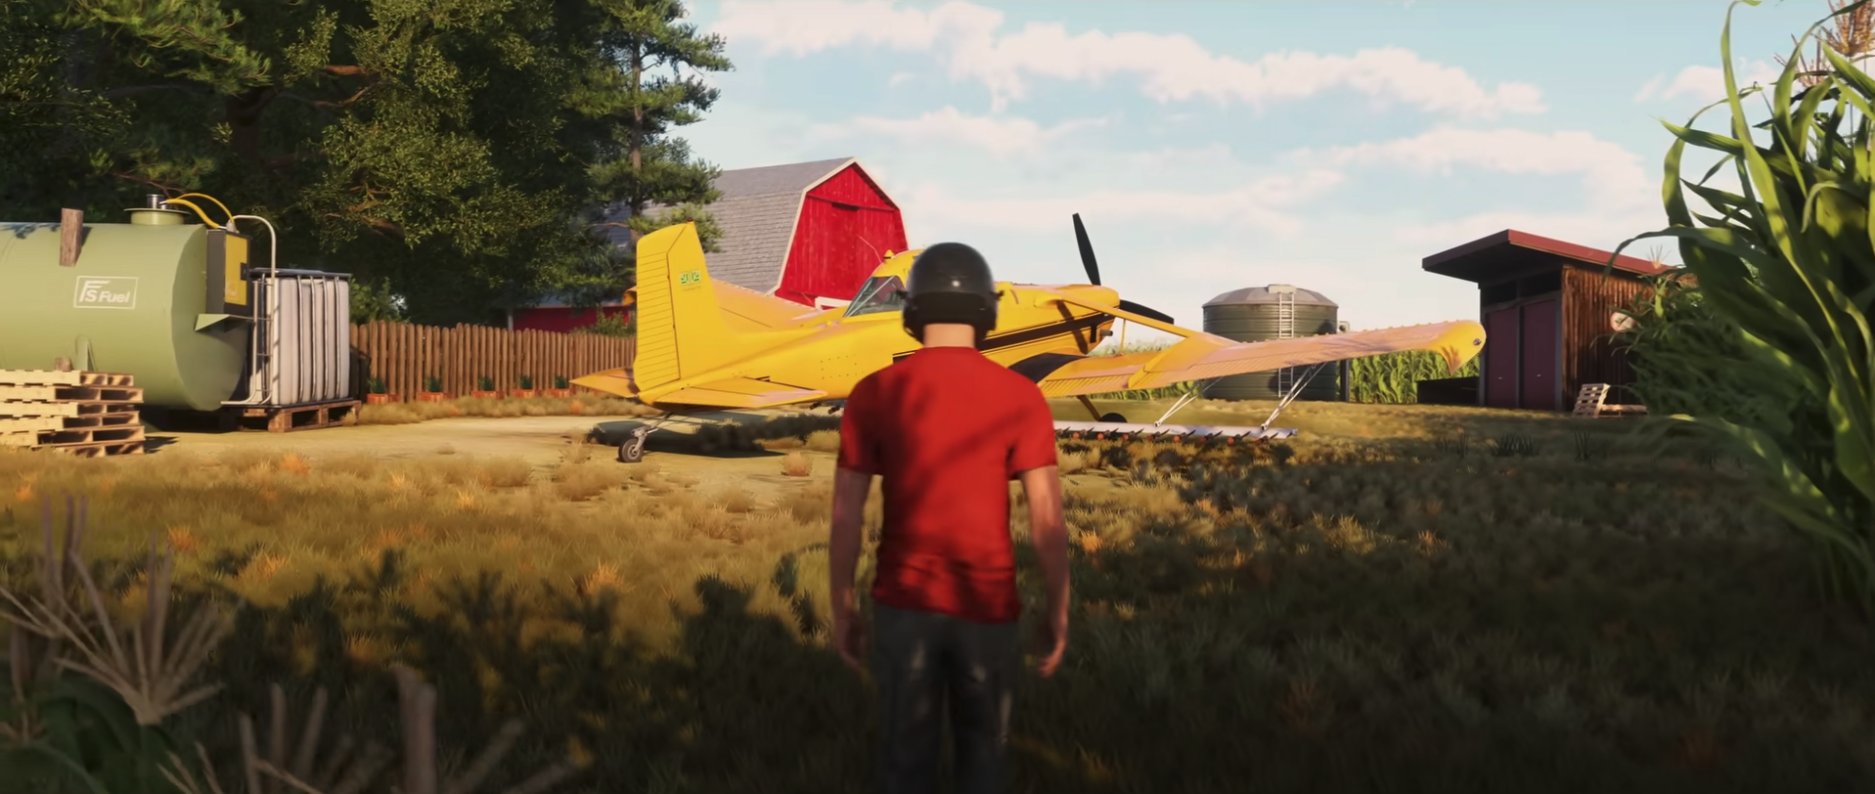 Microsoft Announces Flight Simulator 2024